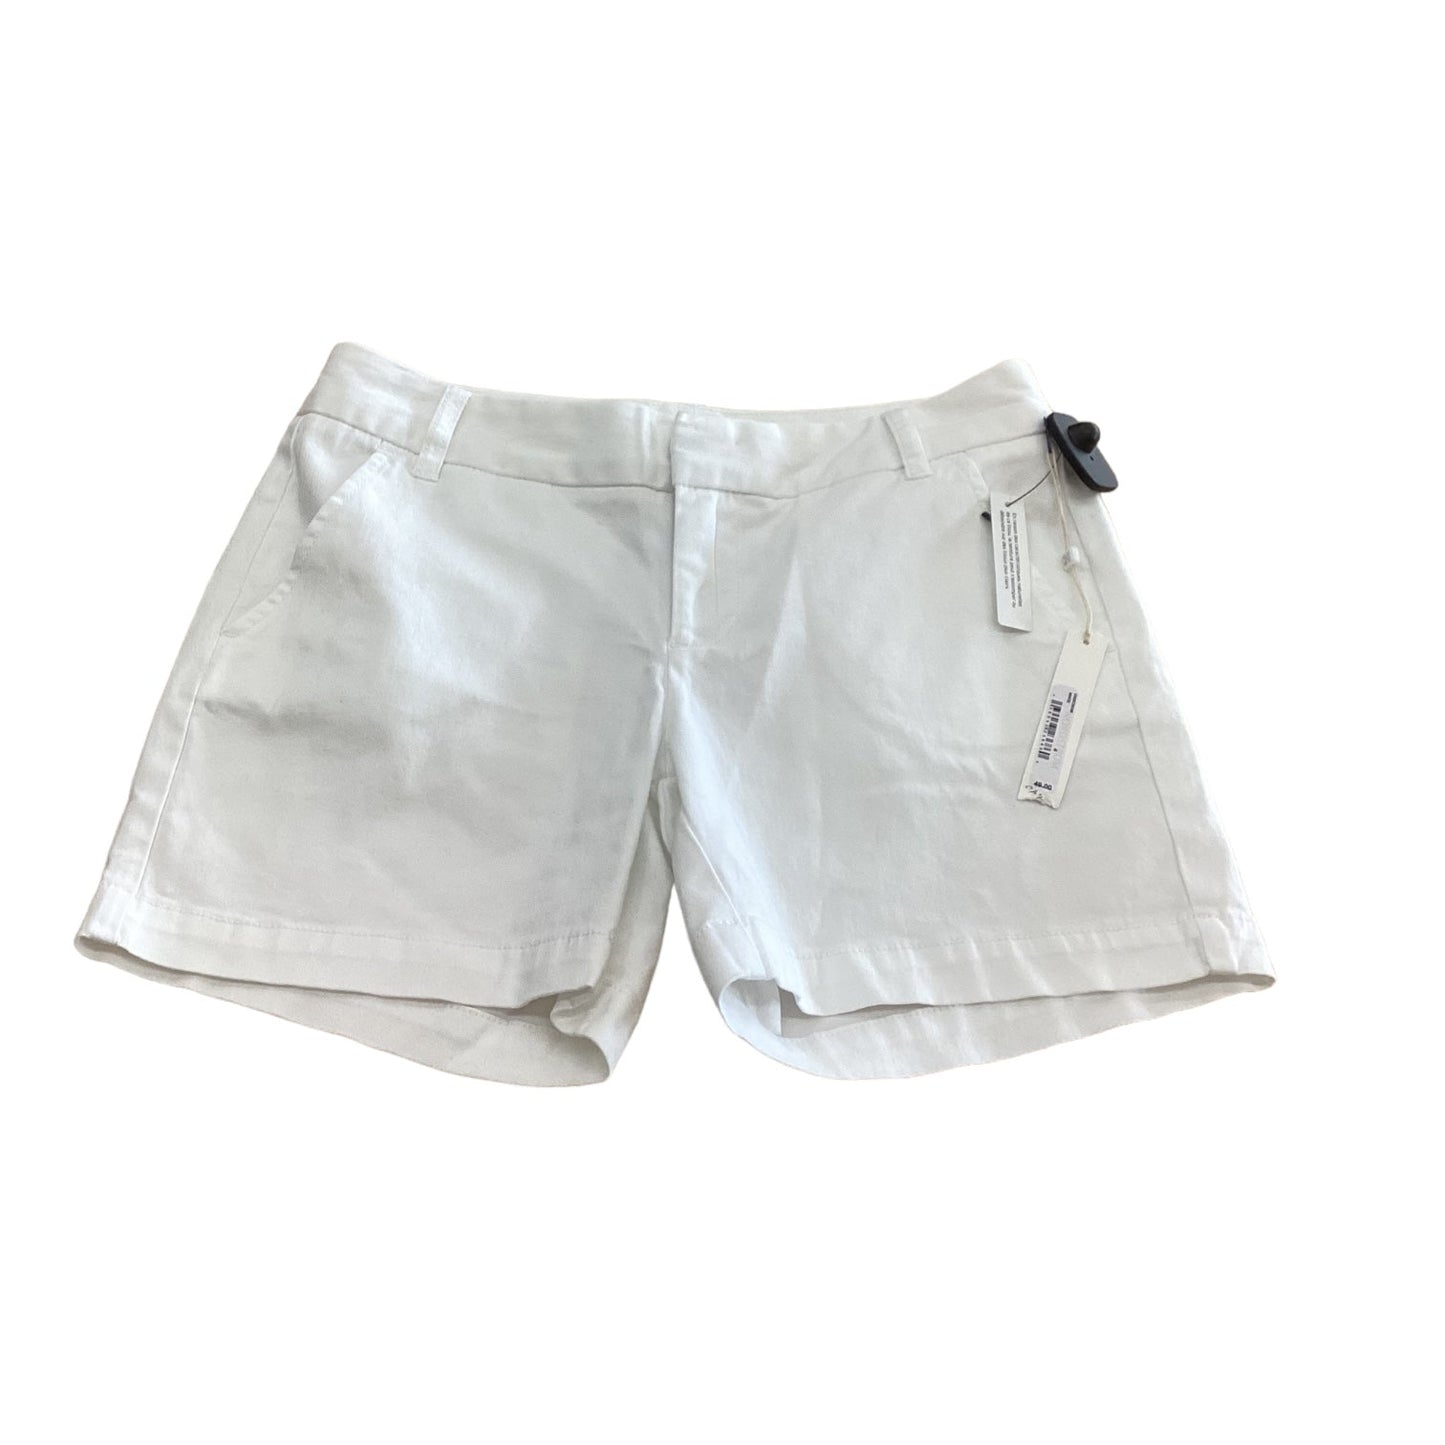 White Shorts Caslon, Size 4